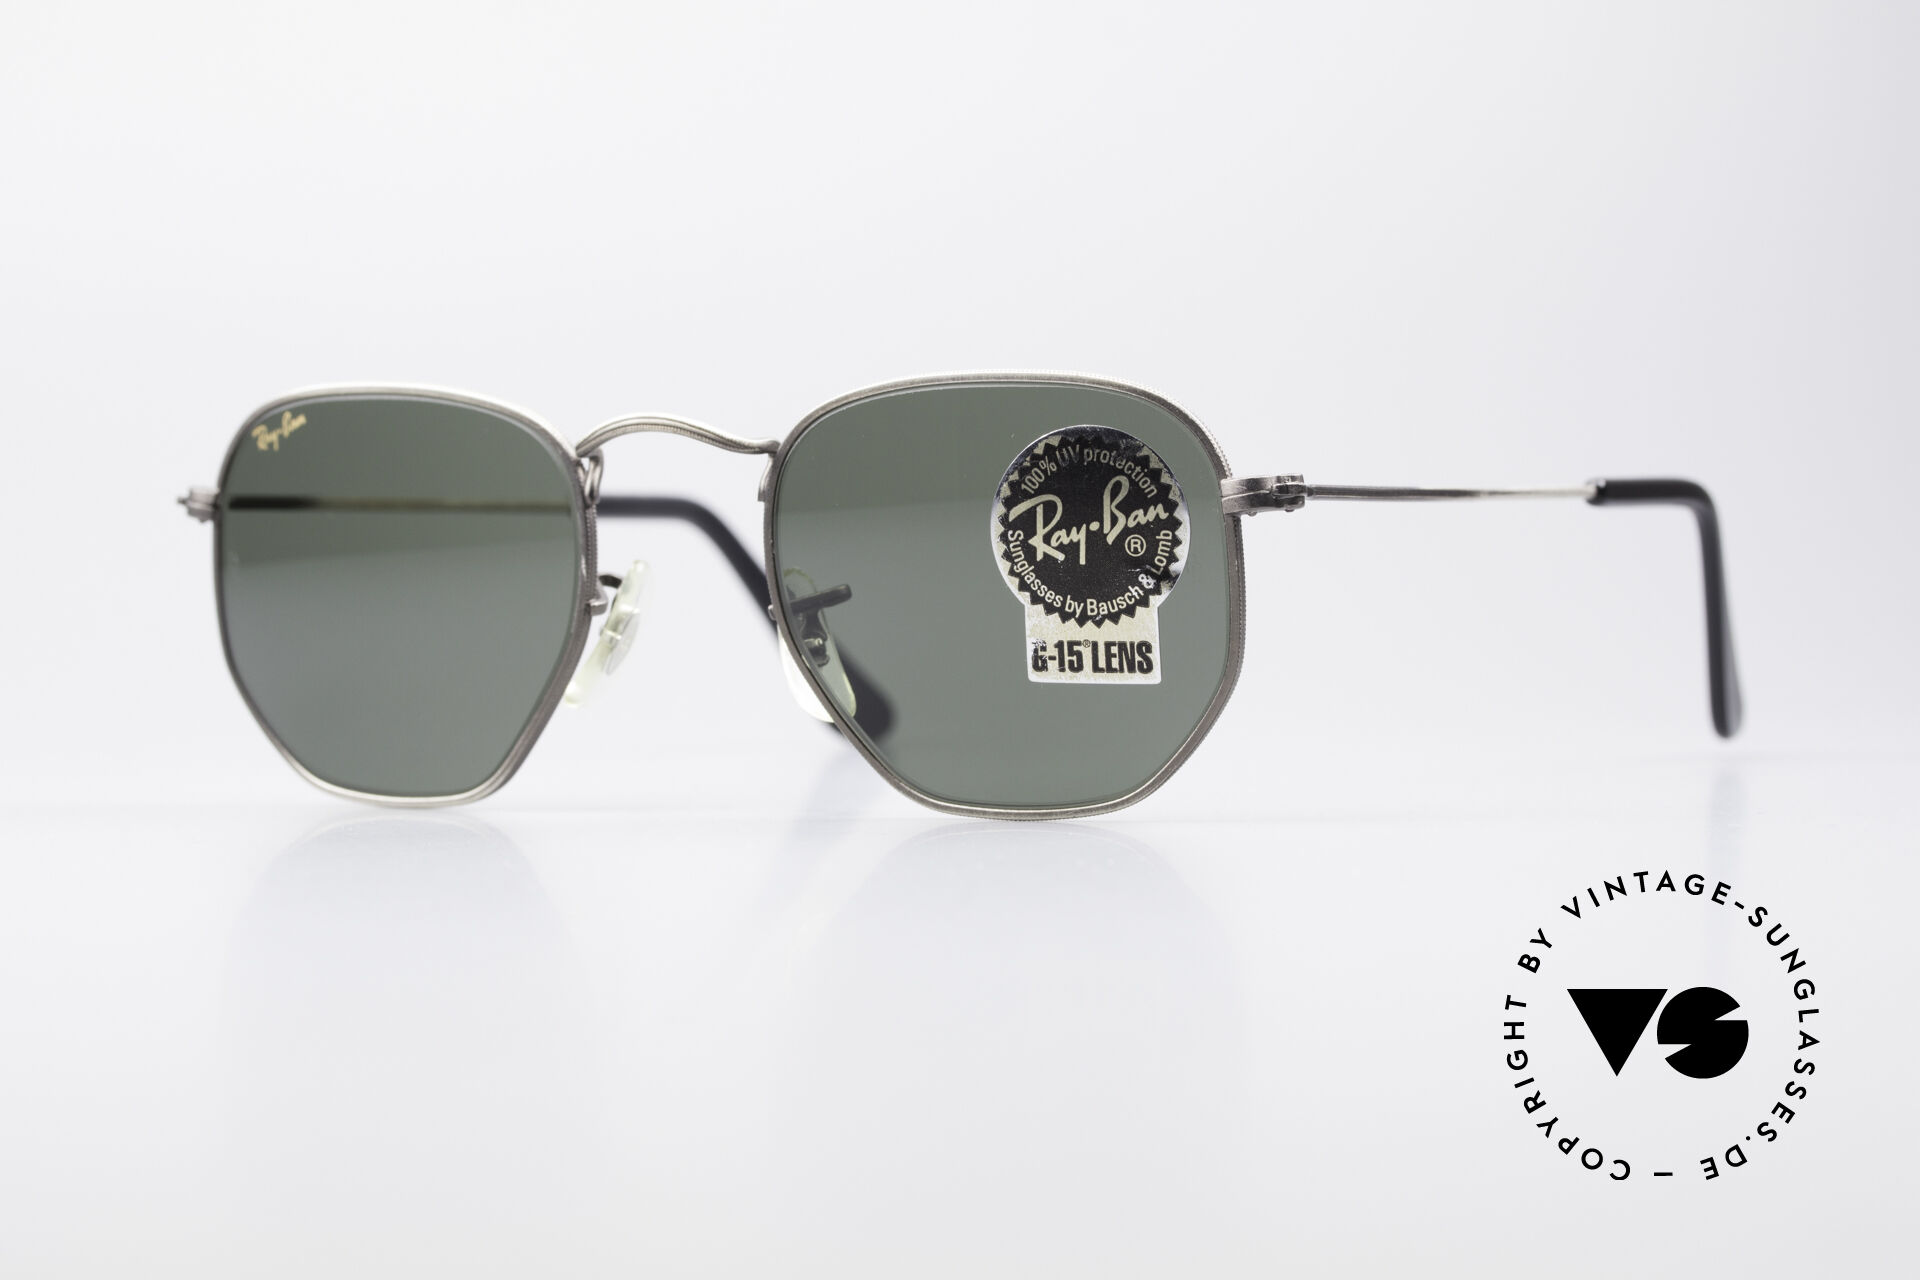 Sunglasses Ray Ban Classic Style III B&L USA Sunglasses Antique